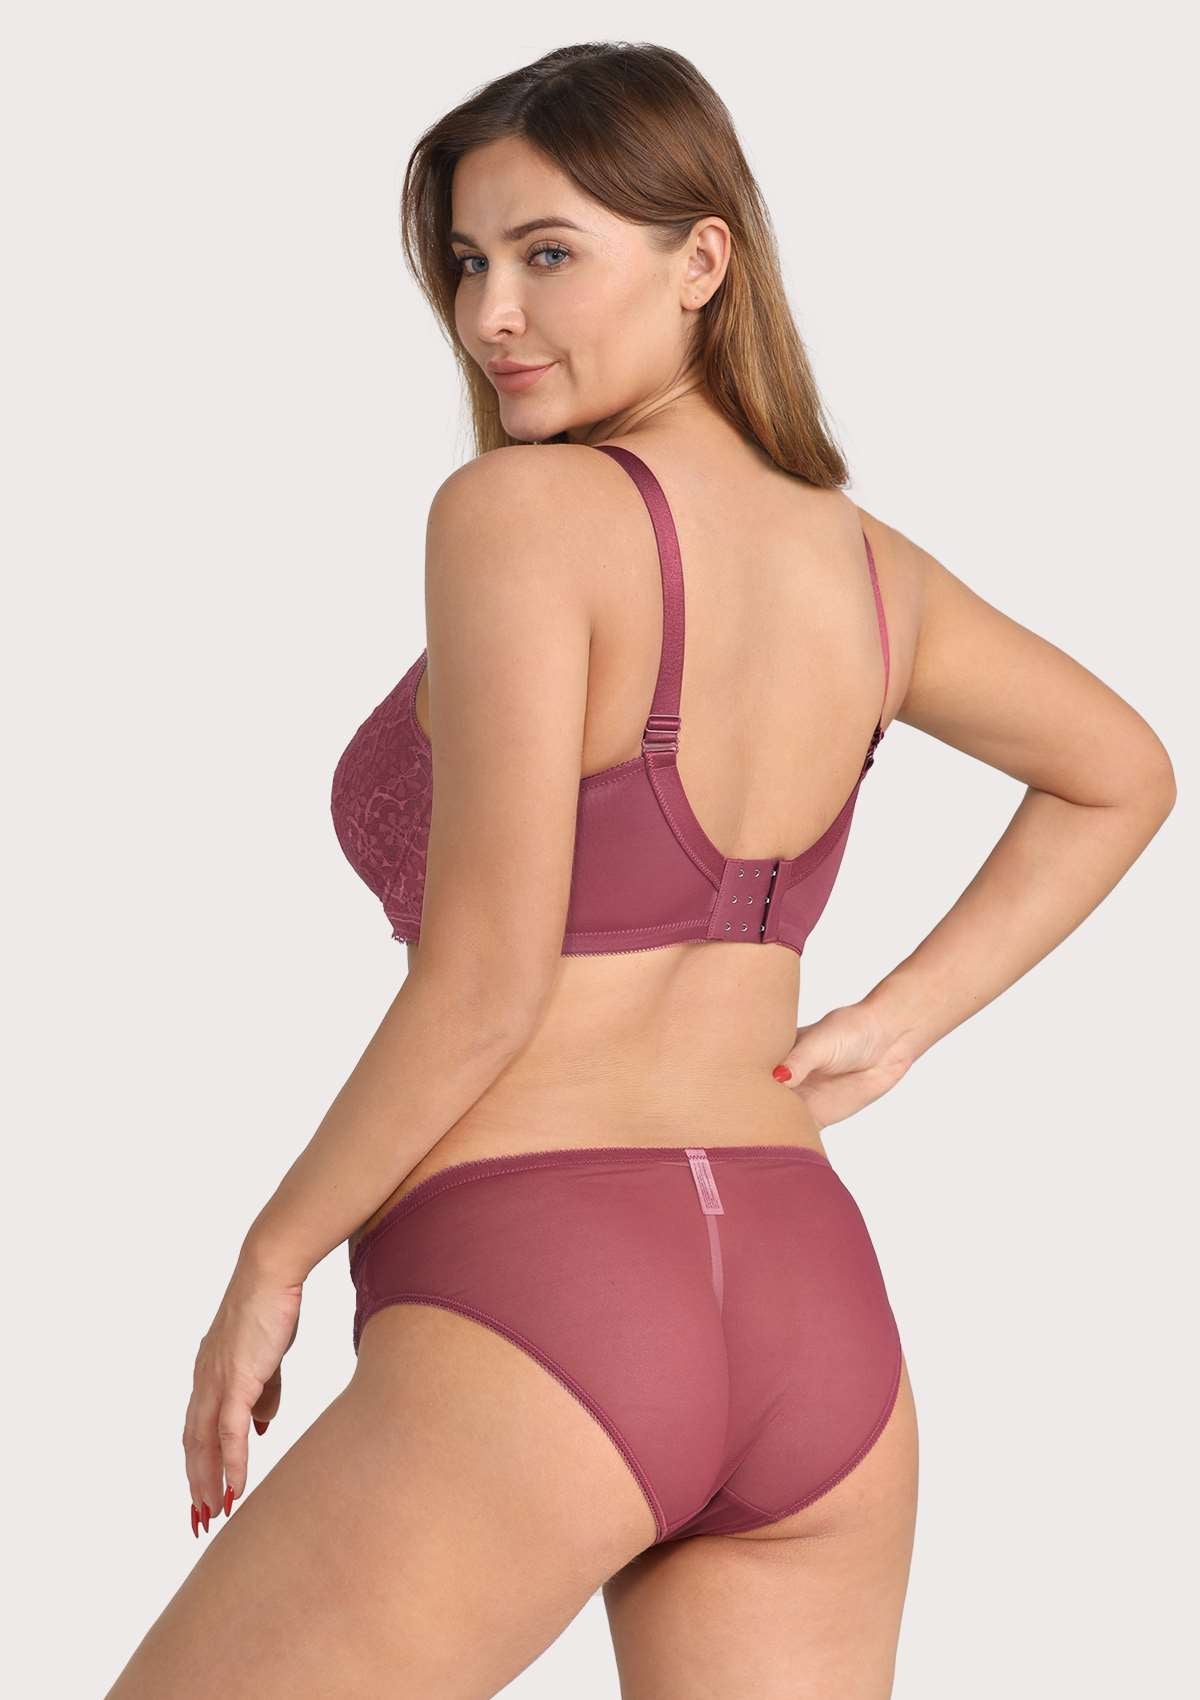 HSIA Anemone Sexy Lace Bra Panty Set: Thick Strap Bra - Burgundy / 36 / D